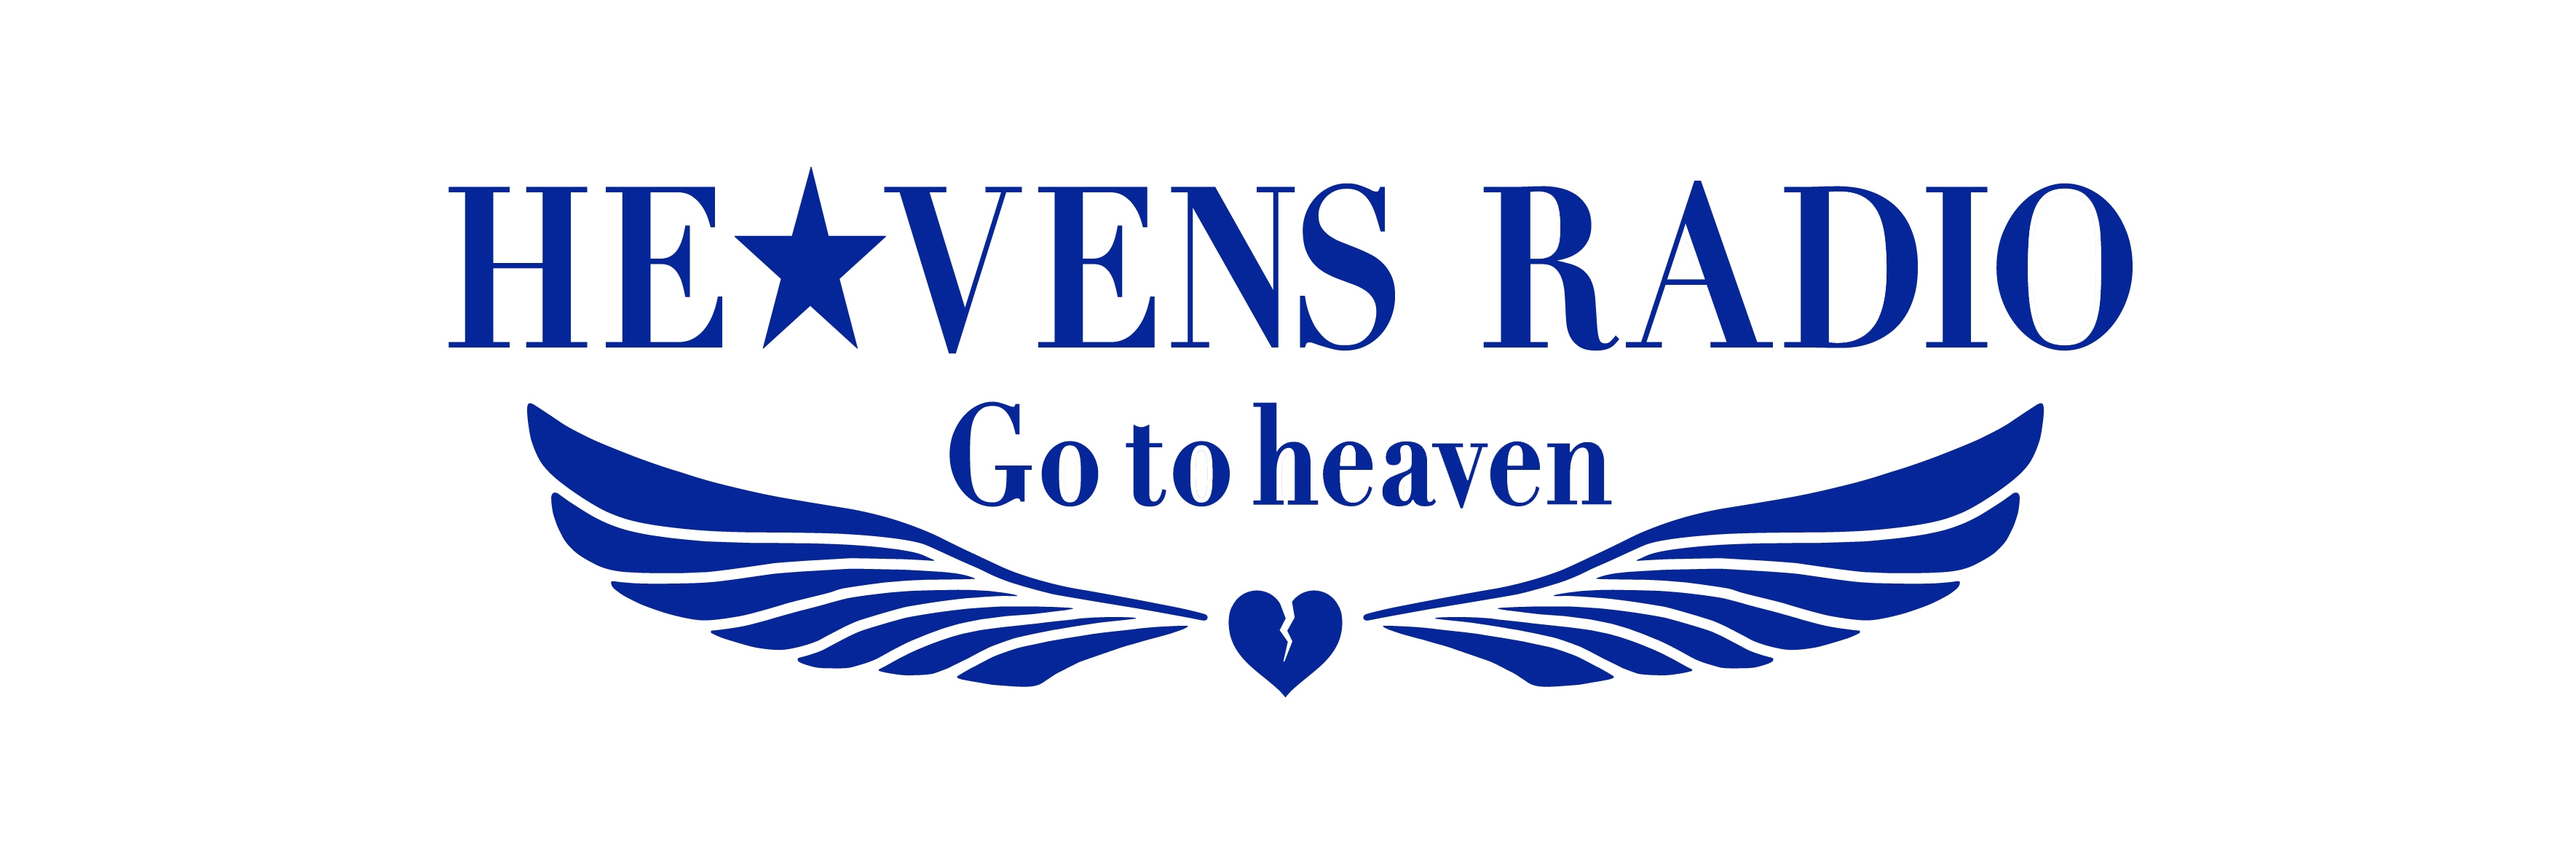 He Vens Radio Go To Heaven のdjcd Vol 3の詳細が決定 ジャケットはちびキャライラスト が全員登場 株式会社アニメイトホールディングスのプレスリリース